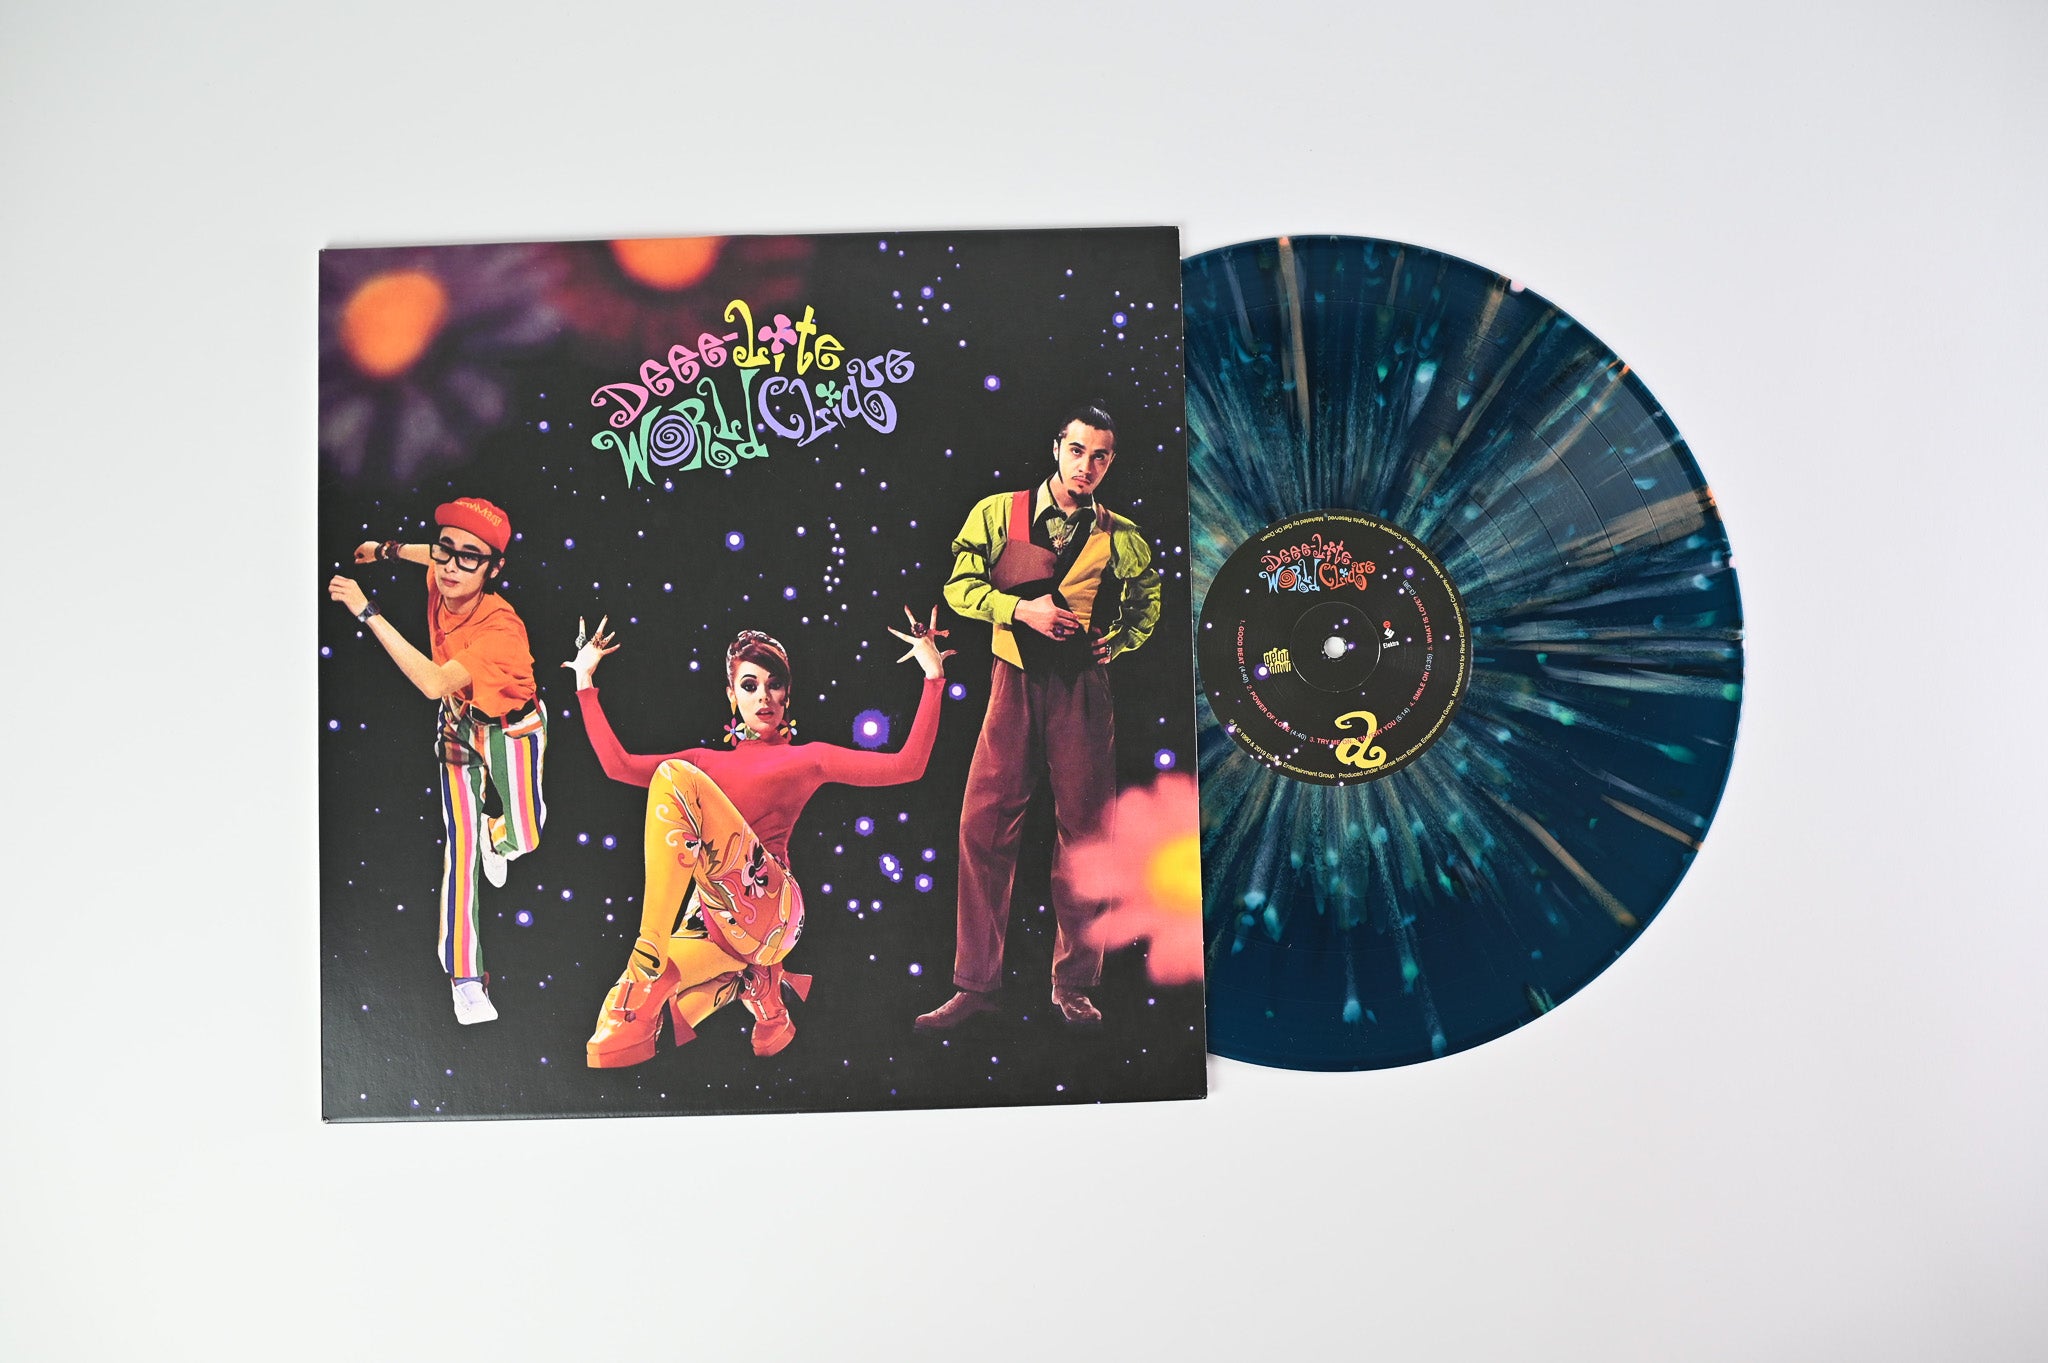 Deee-Lite - World Clique on Get On Down/Elektra Reissue on Groovy Cosmic Splatter Vinyl